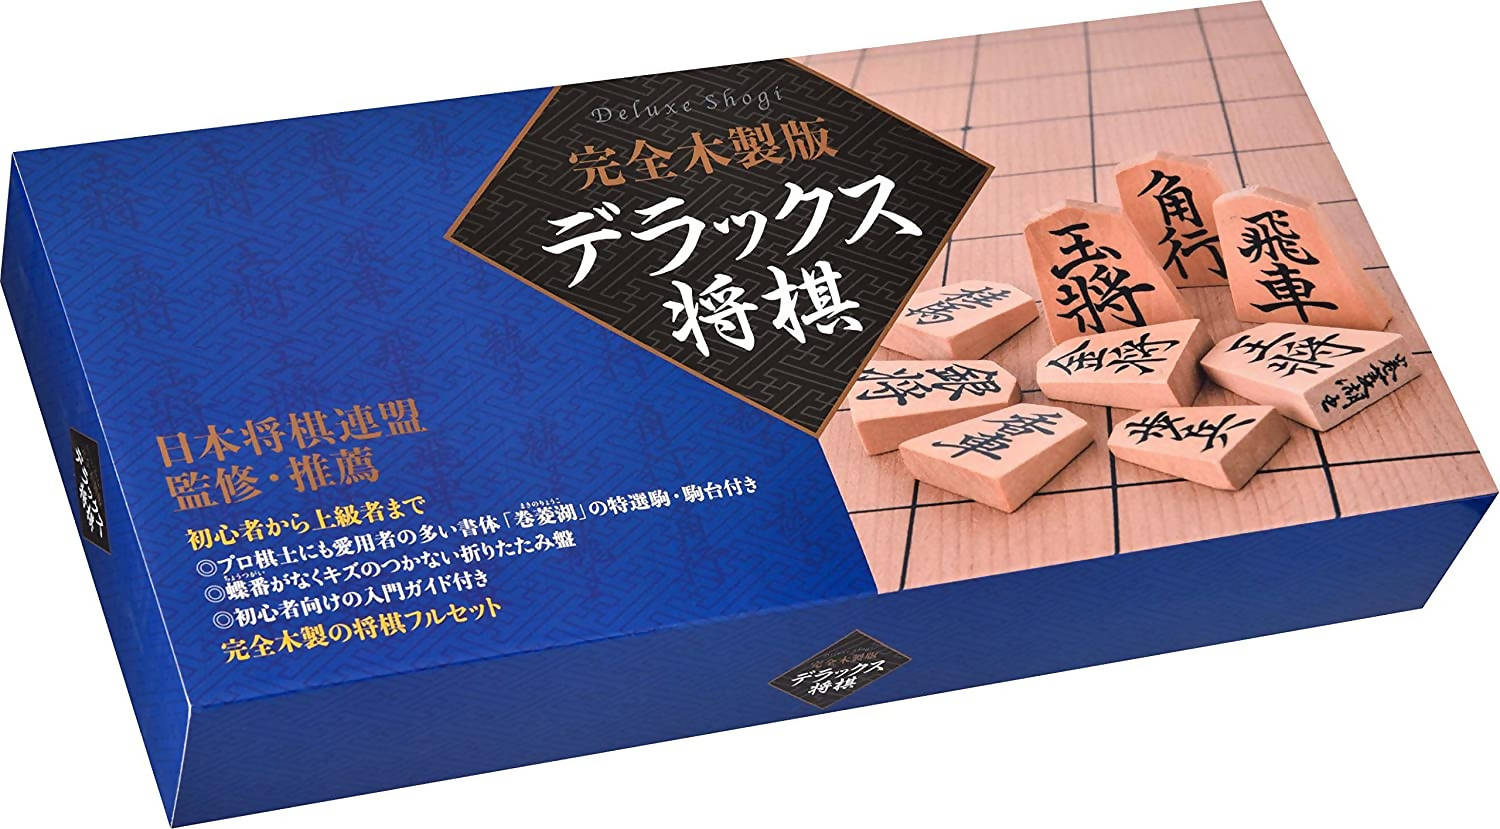 Kumon New Study Shogi (Japanese chess) How to play Shogi.